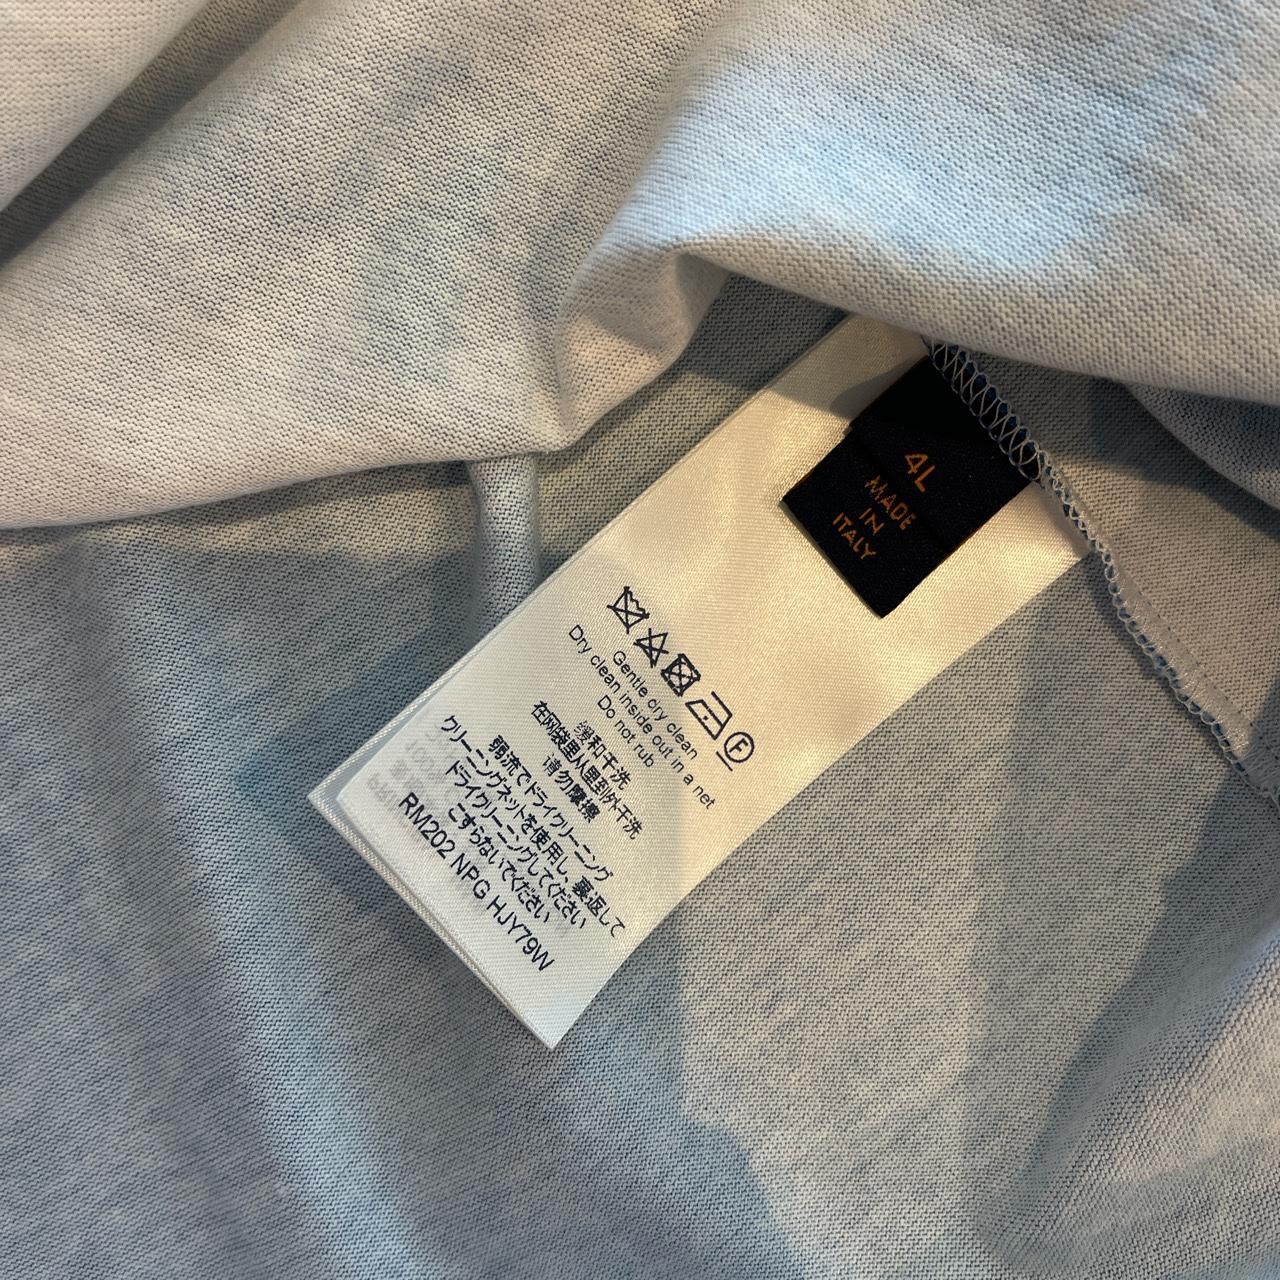 Louis Vuitton Barcode & Earth T-Shirt XS (Only one - Depop